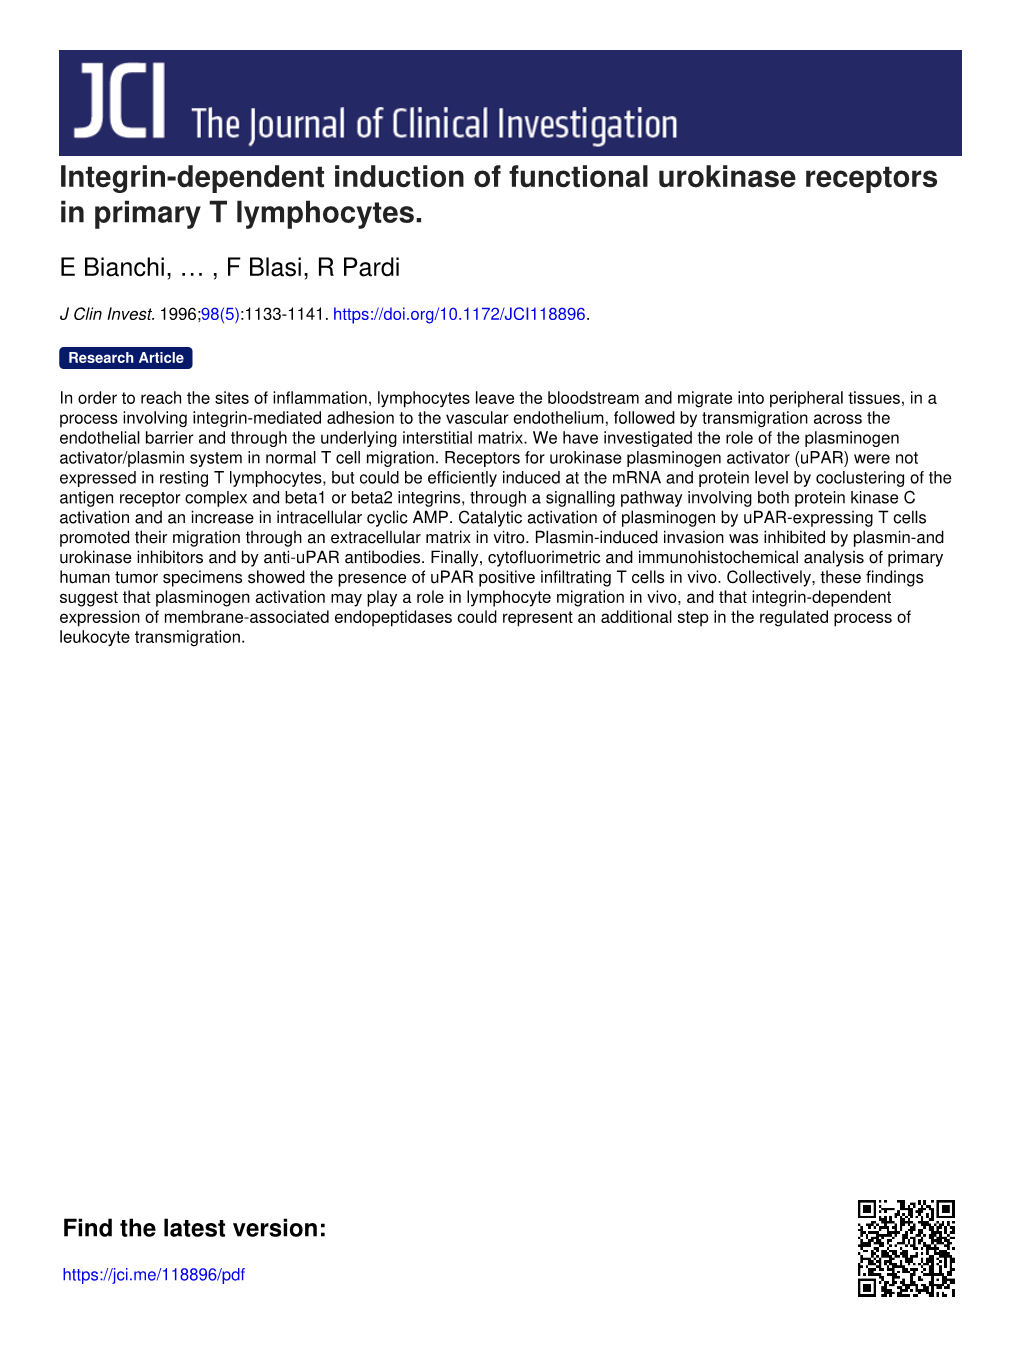 Integrin-Dependent Induction of Functional Urokinase Receptors in Primary T Lymphocytes